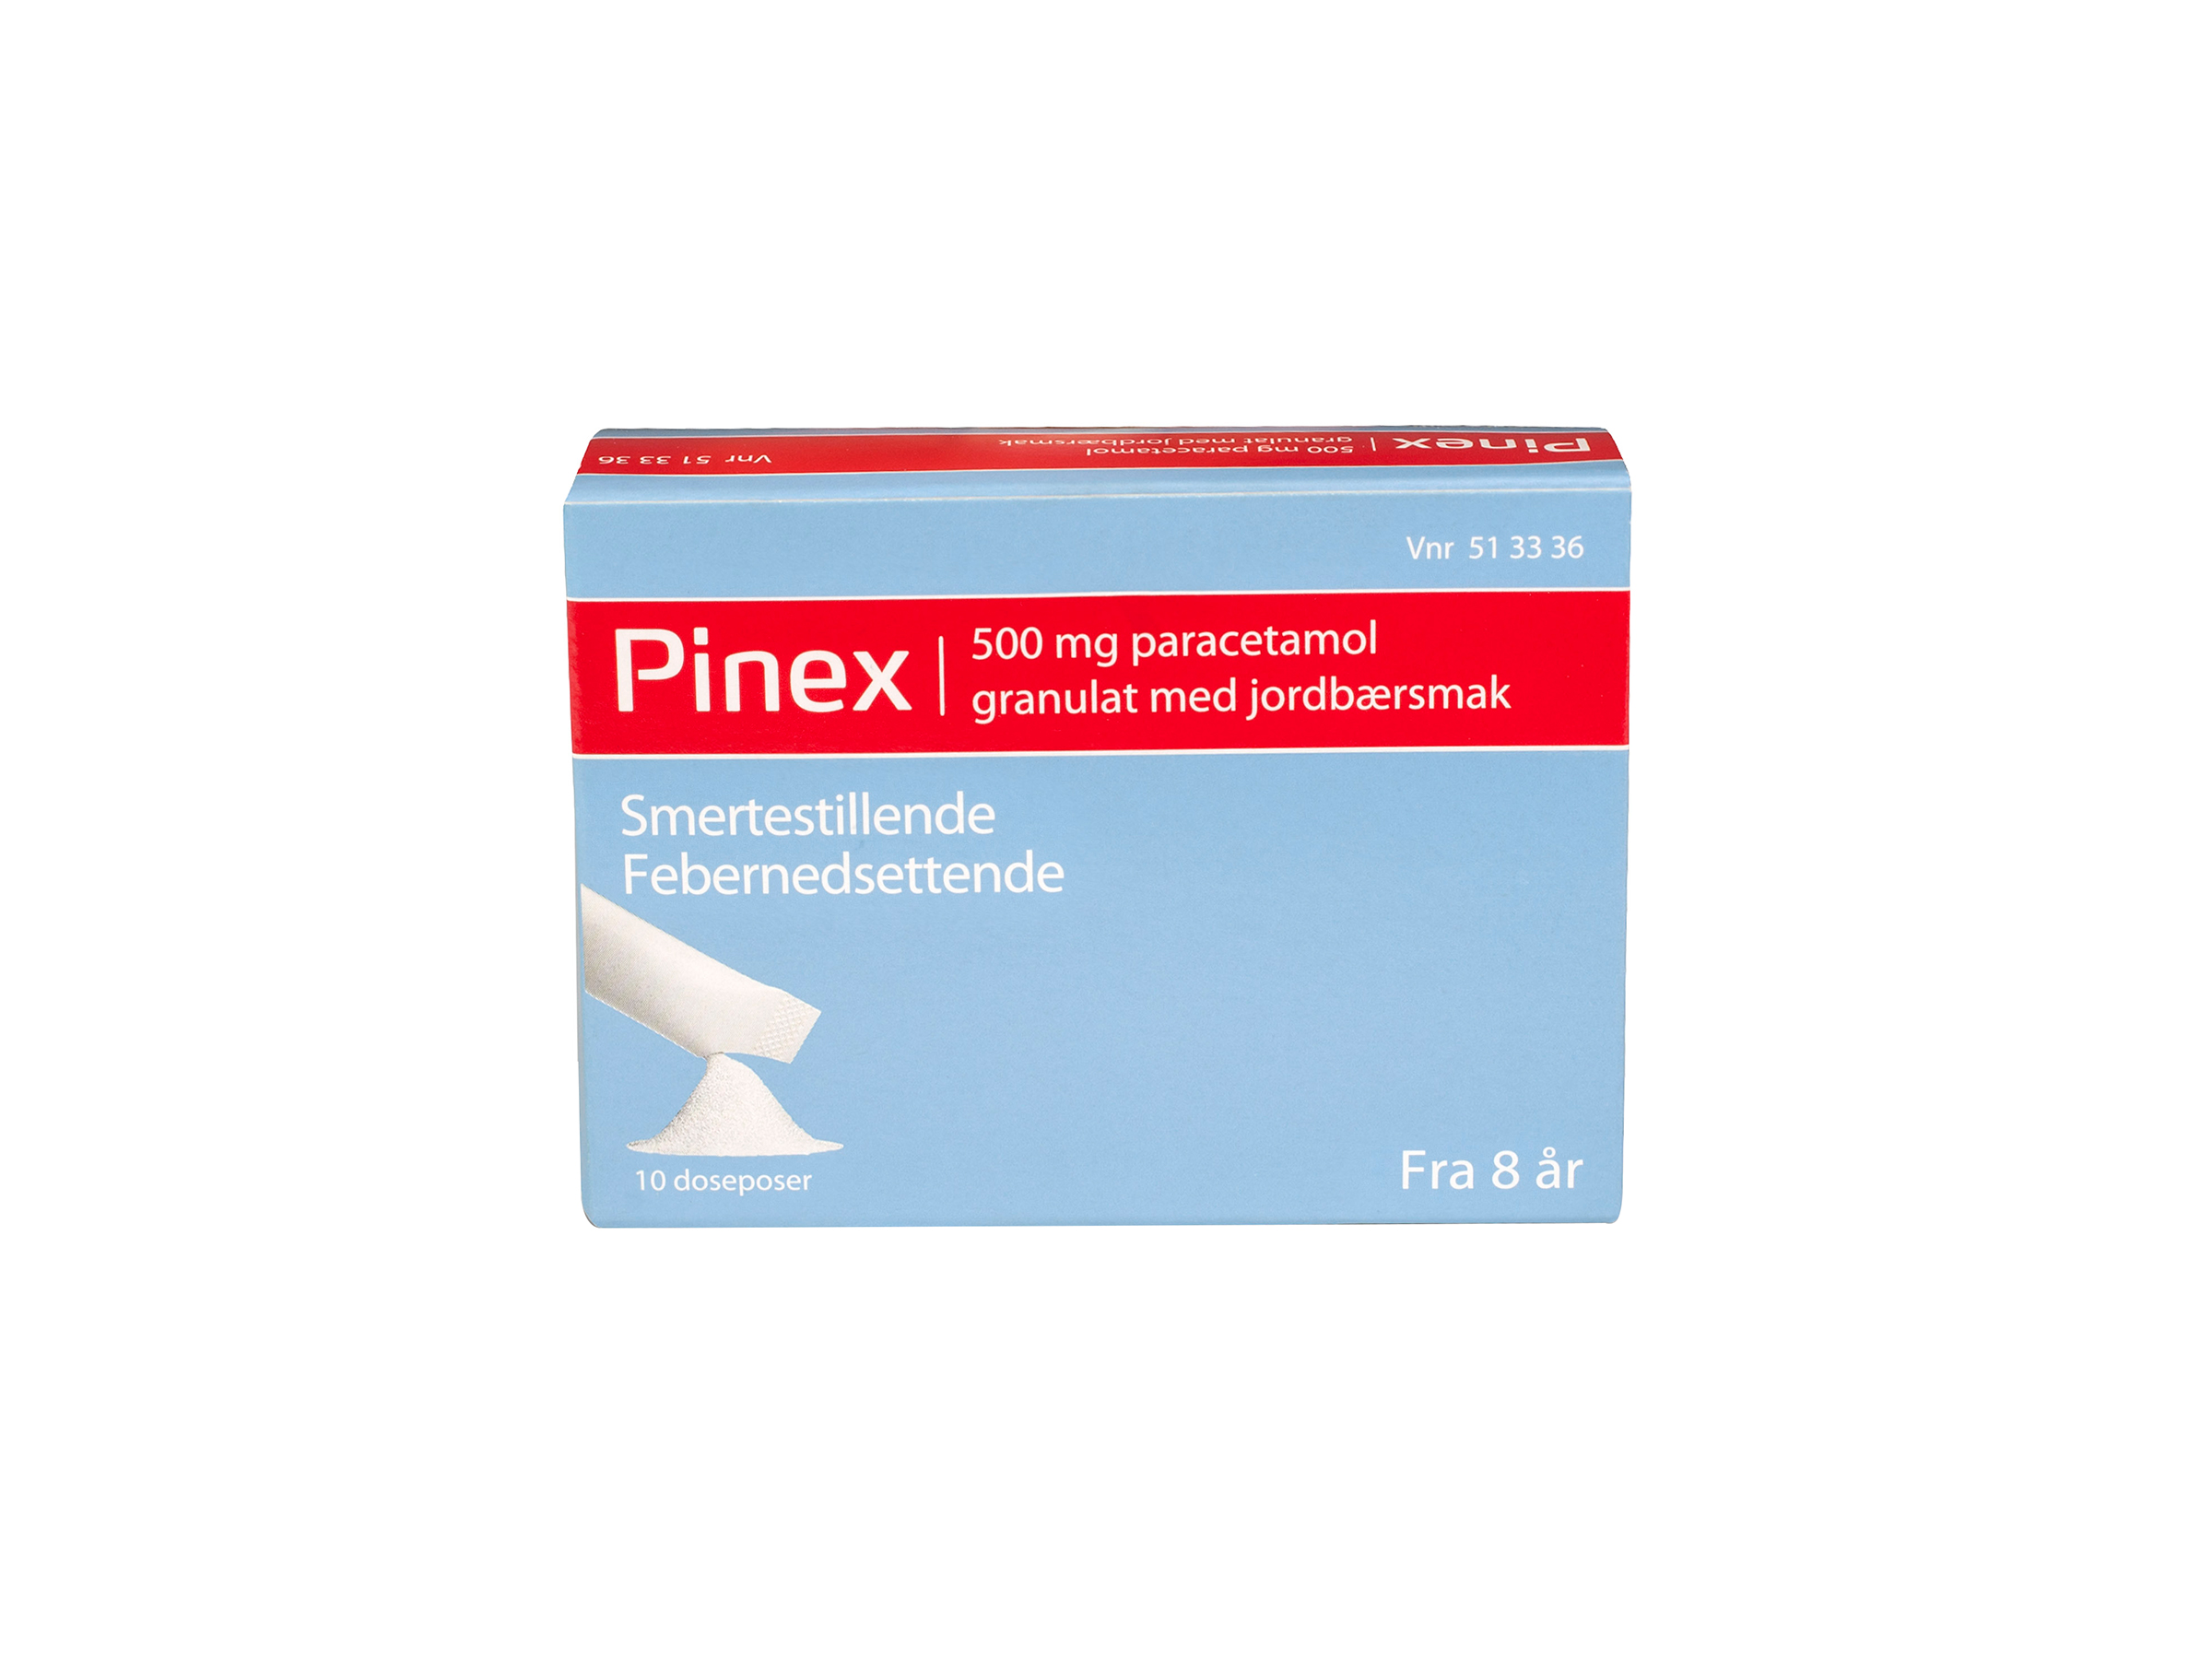 Pinex Granulat, 10 doseposer